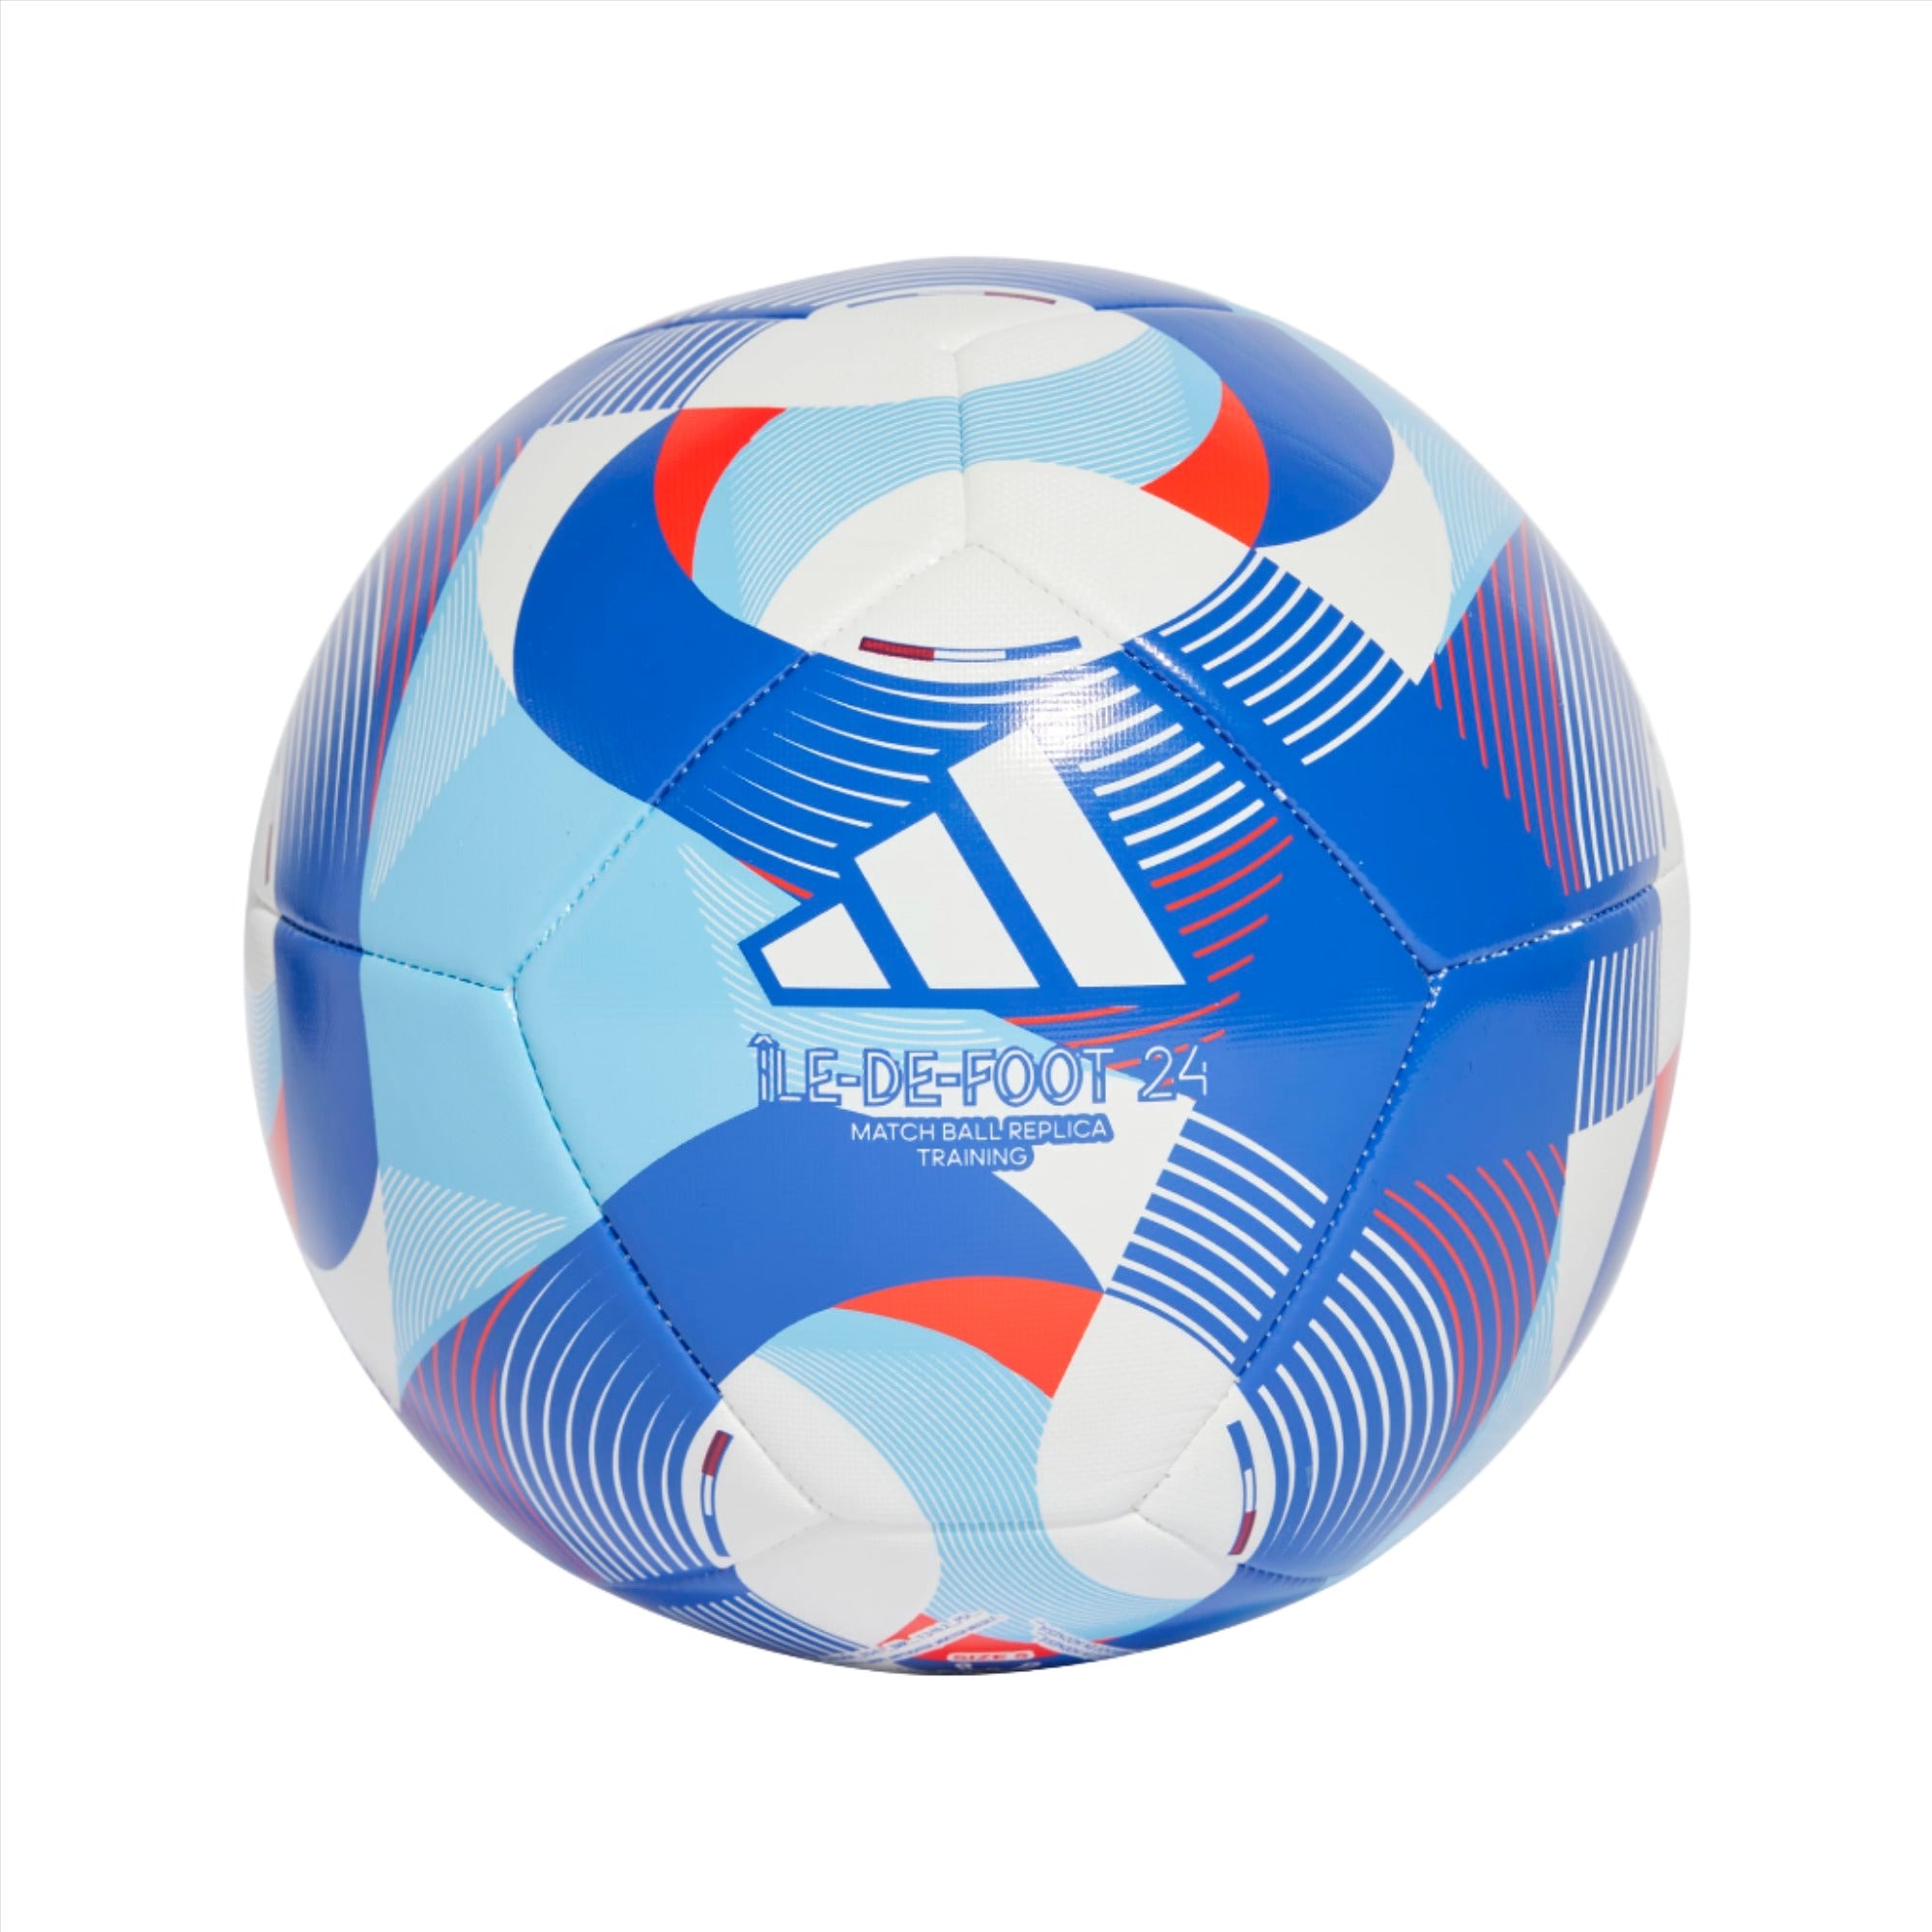 adidas Paris 2024 Summer Olympic Games Training Soccer Ball